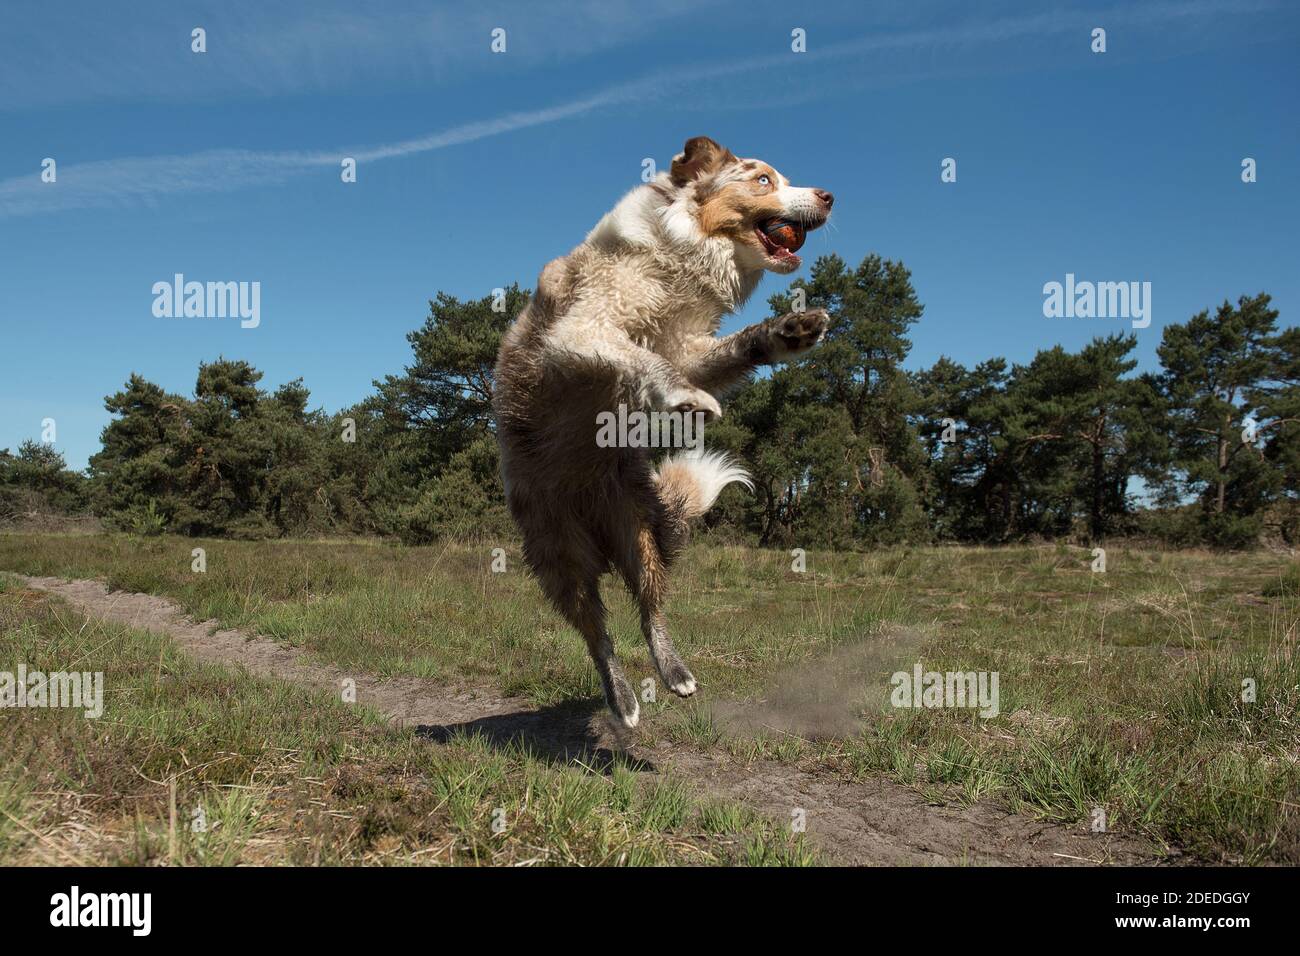 Playful Australian shepherd catching a ball on a sunny day outdoors Stock Photo